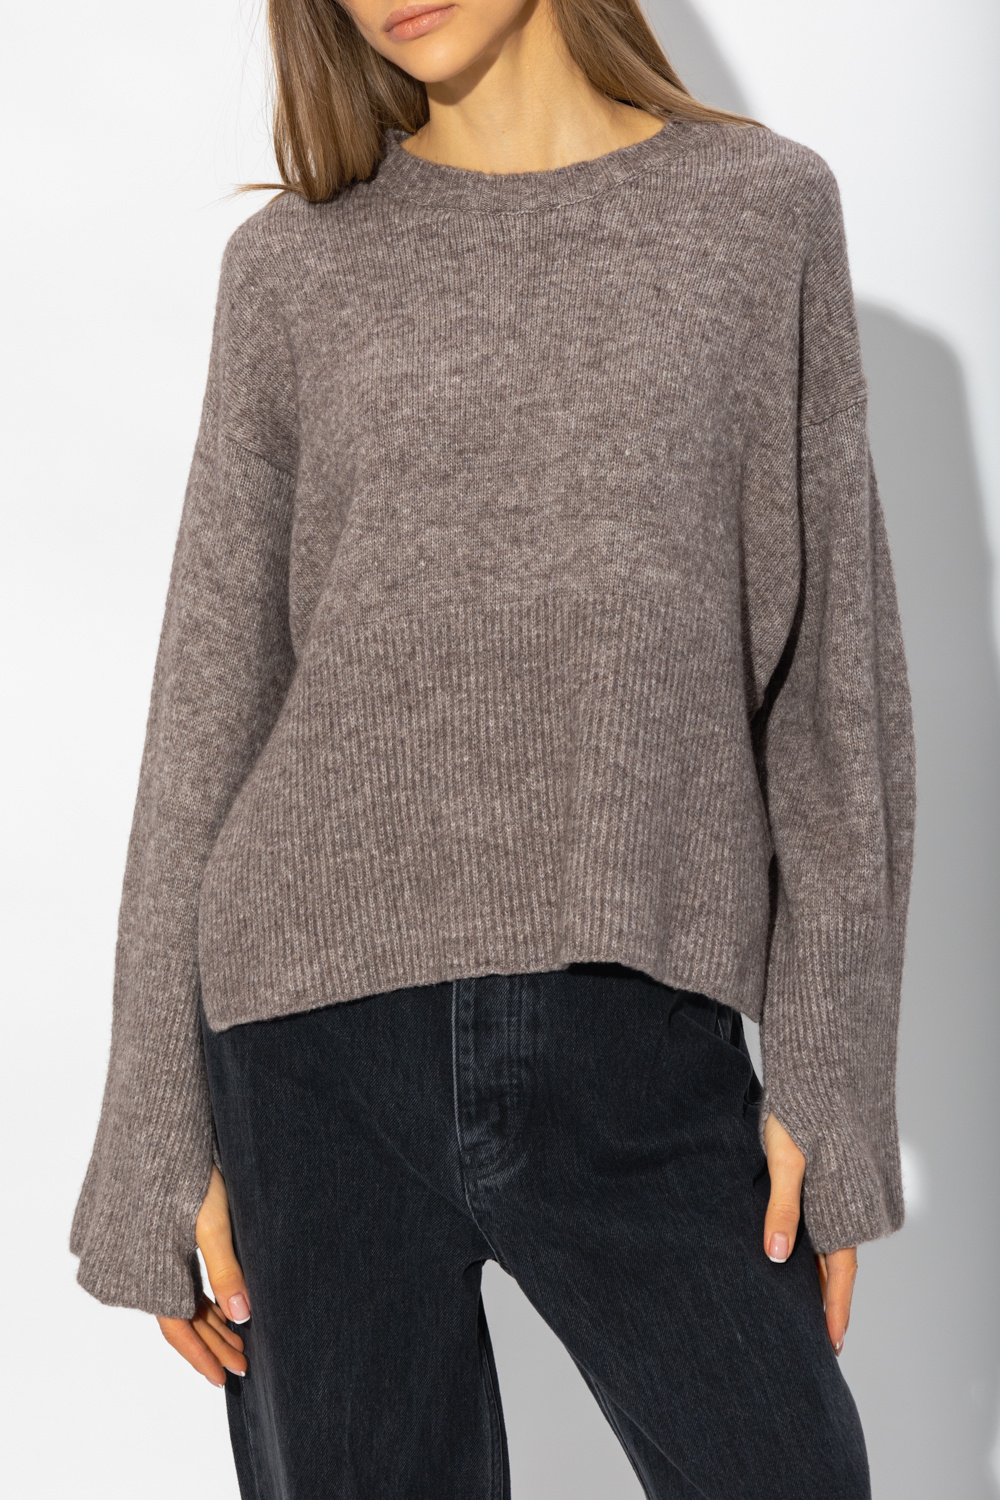 Birgitte Herskind ‘Andres’ slogan sweater with vents